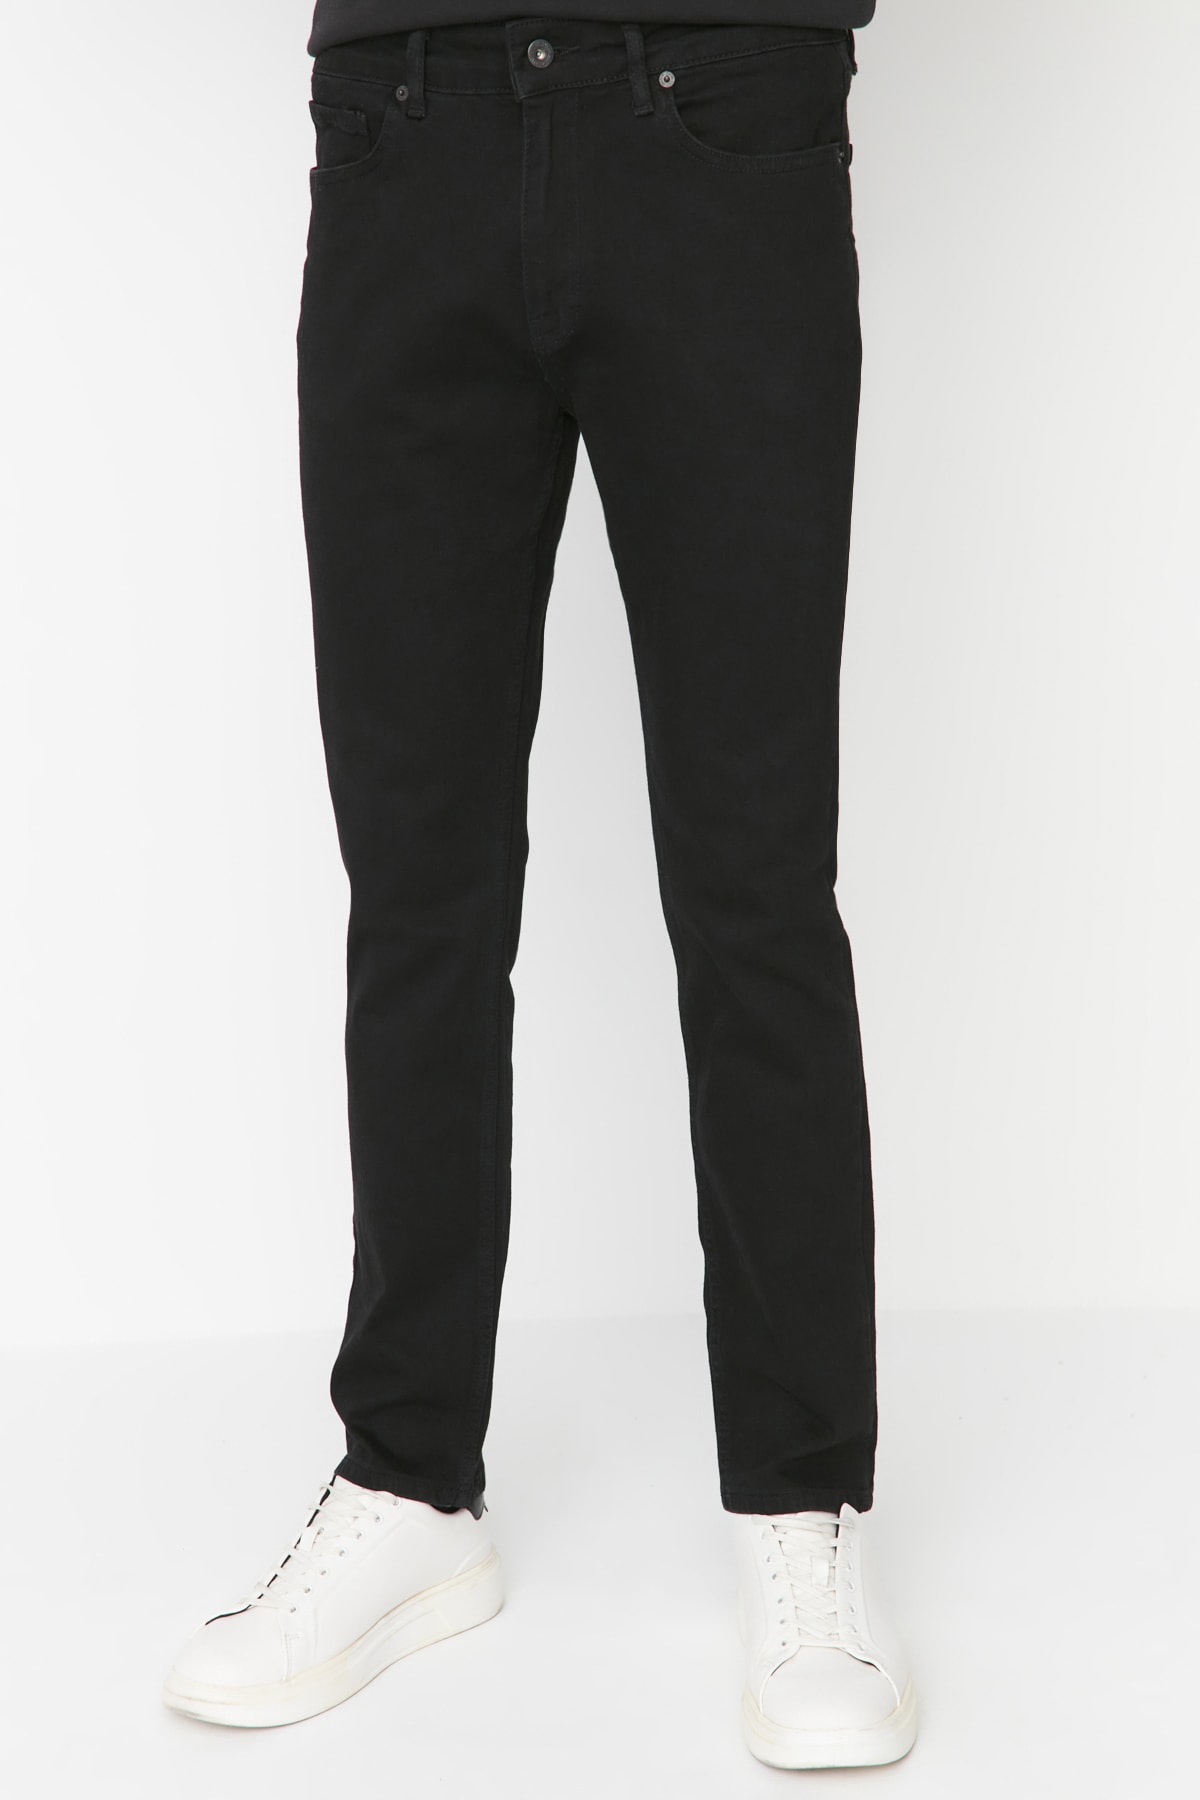 Trendyol Men's Black Flexible Fabric Slim Fit Jeans Denim Pants